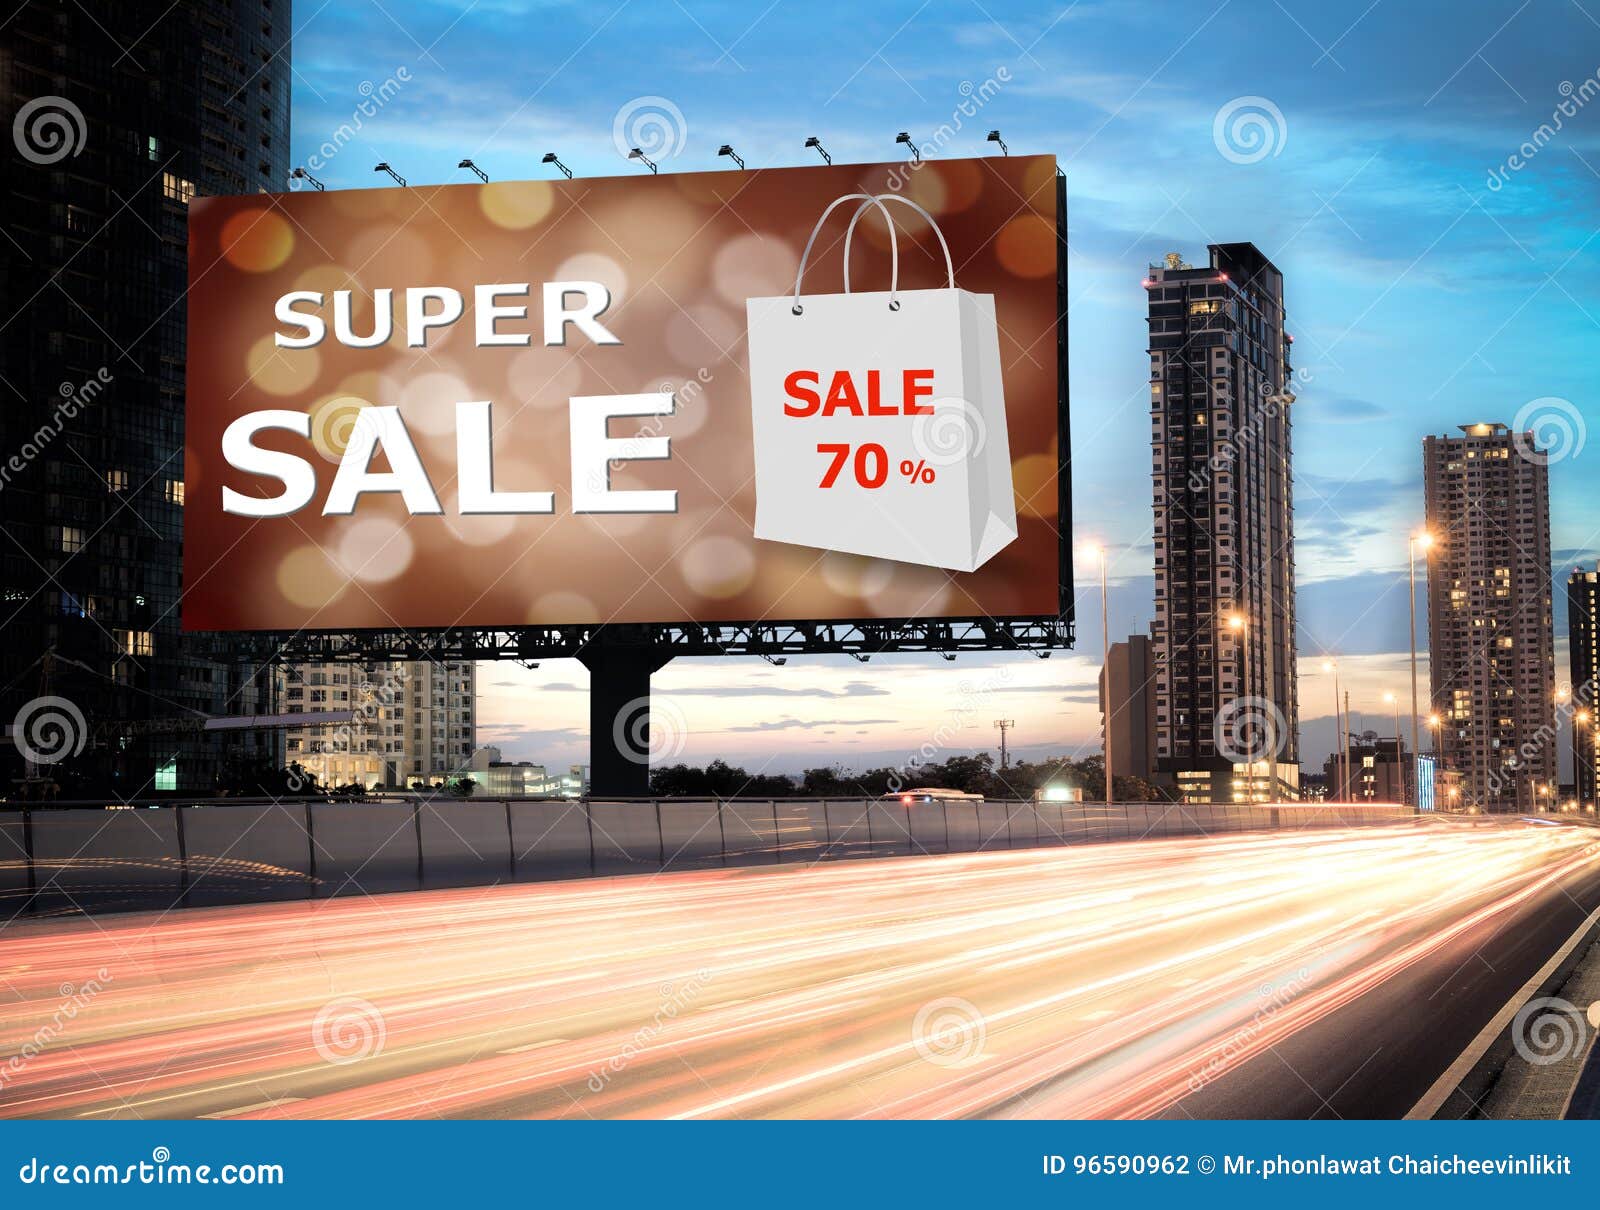 sales concept, outdoor billboards, super sale